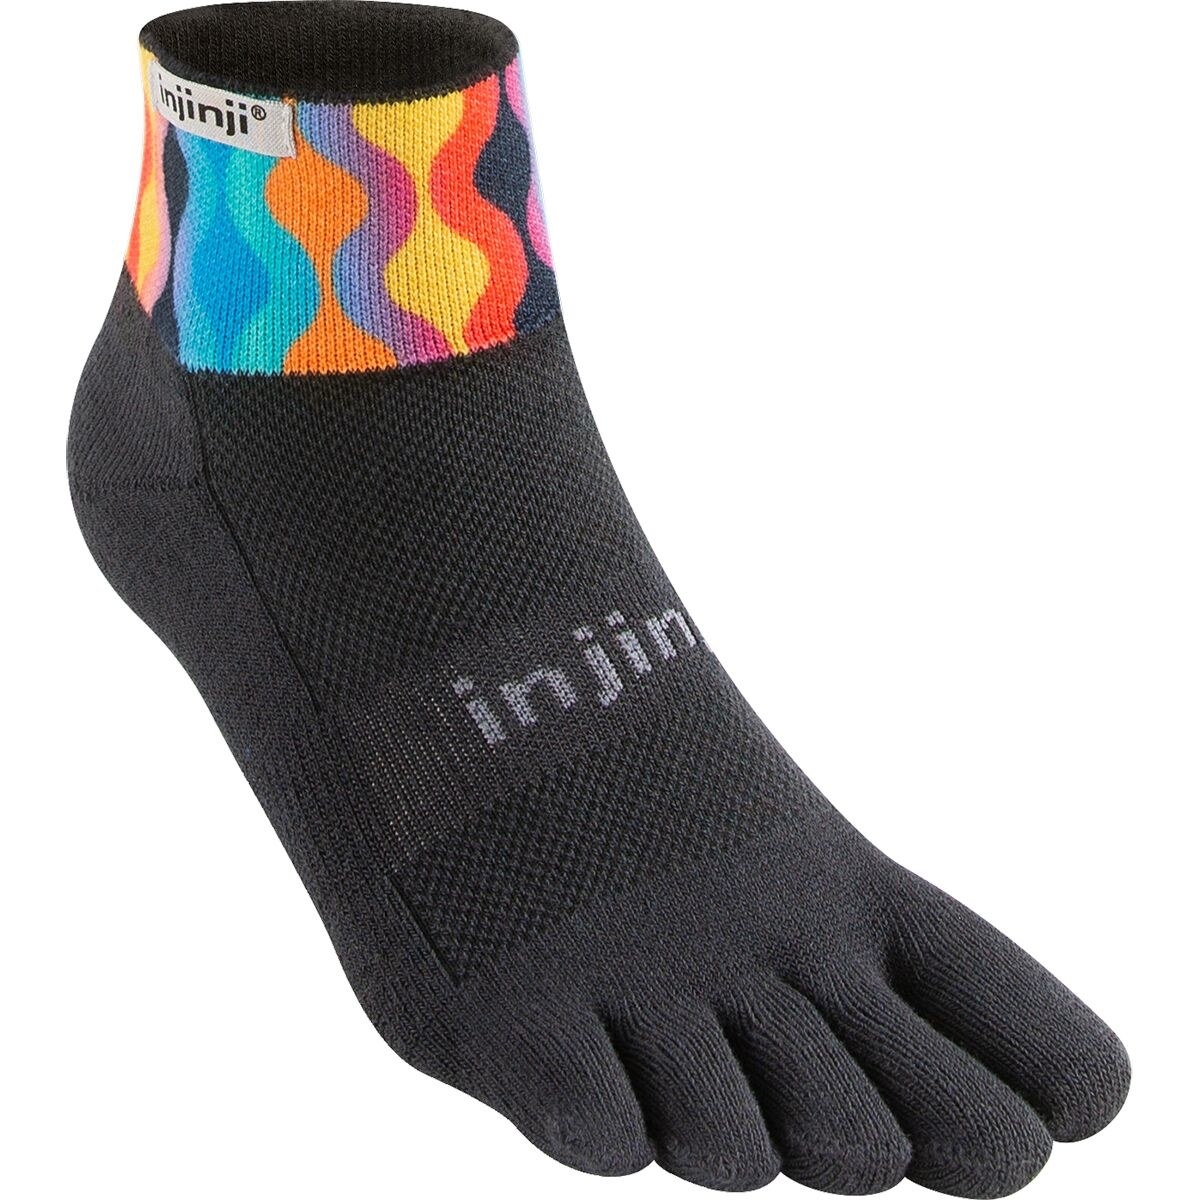 The trail toe sock